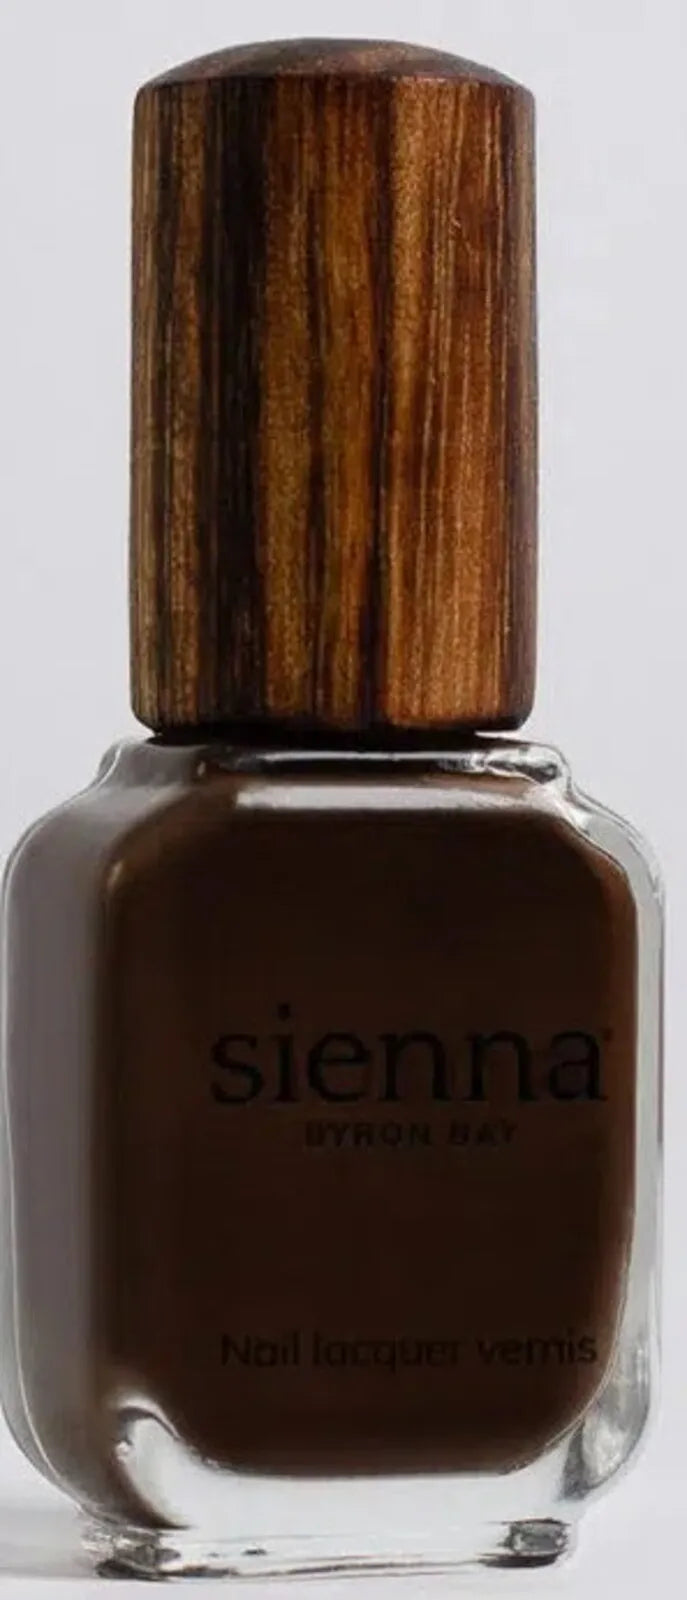 SIENNA Majestic - Dark Choclate Brown 10ml